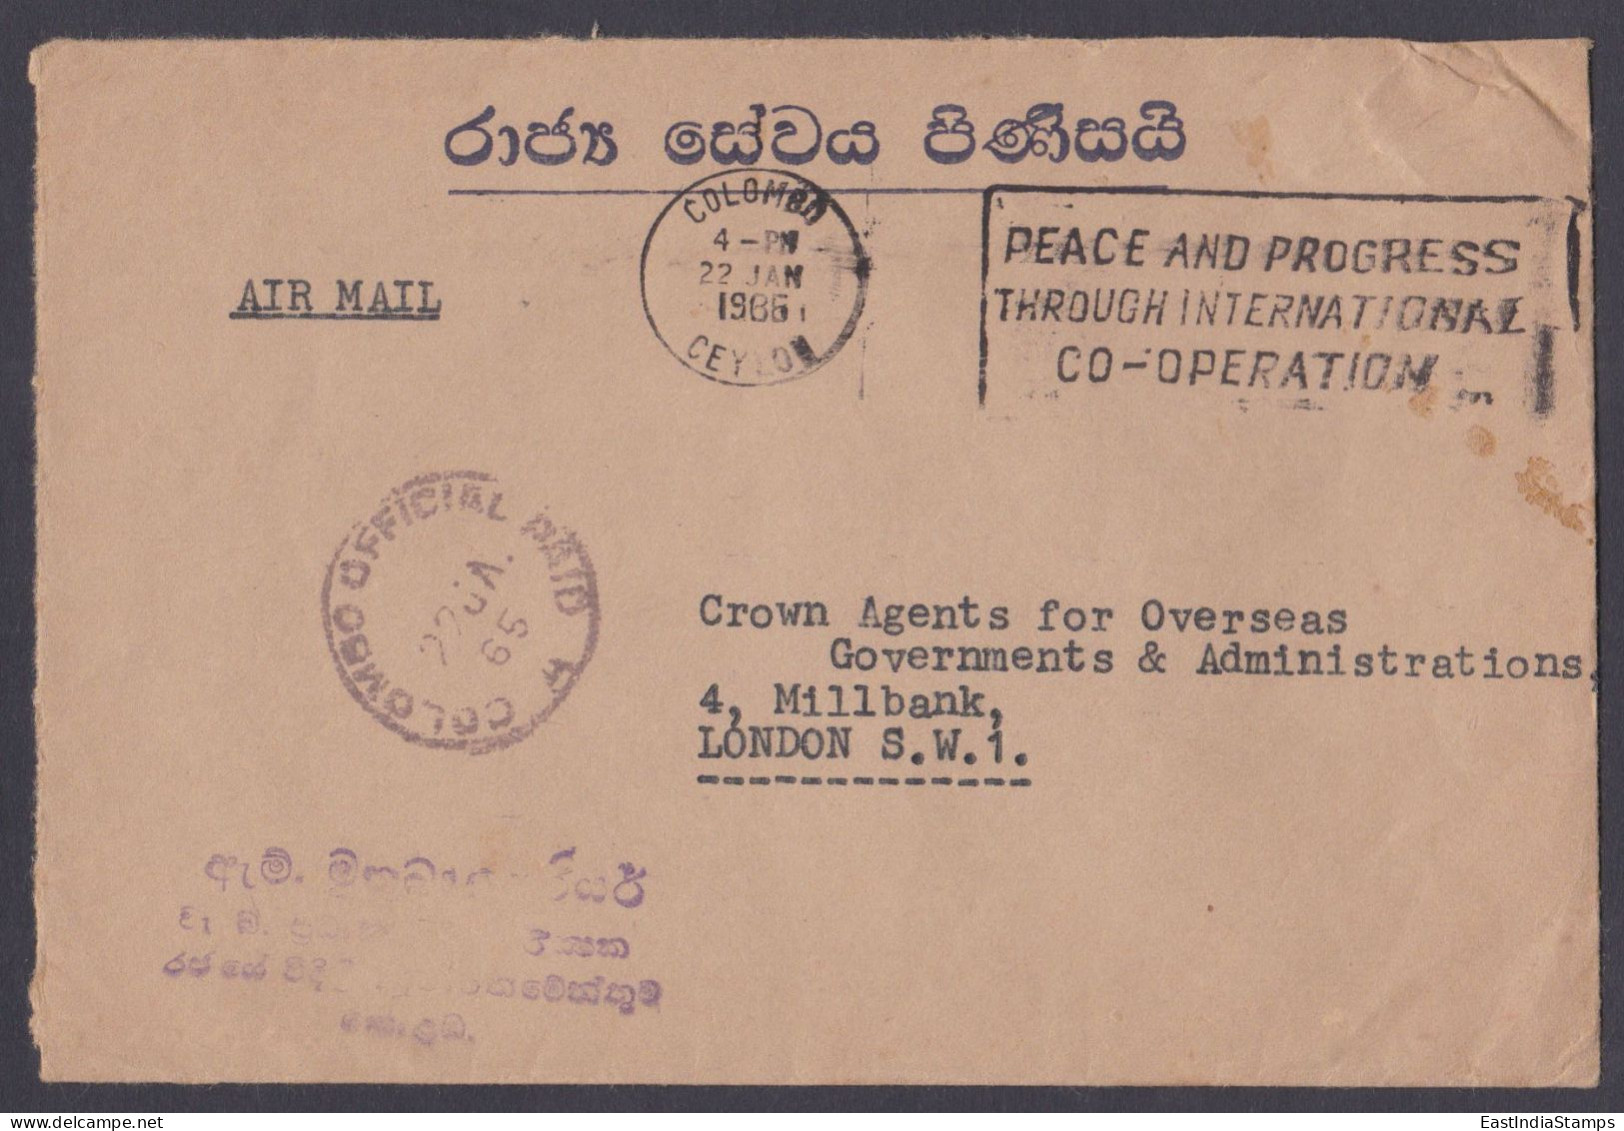 Sri Lanka Ceylon 1986 Used Airmail Cover TO London, England, Official Paid - Sri Lanka (Ceylon) (1948-...)